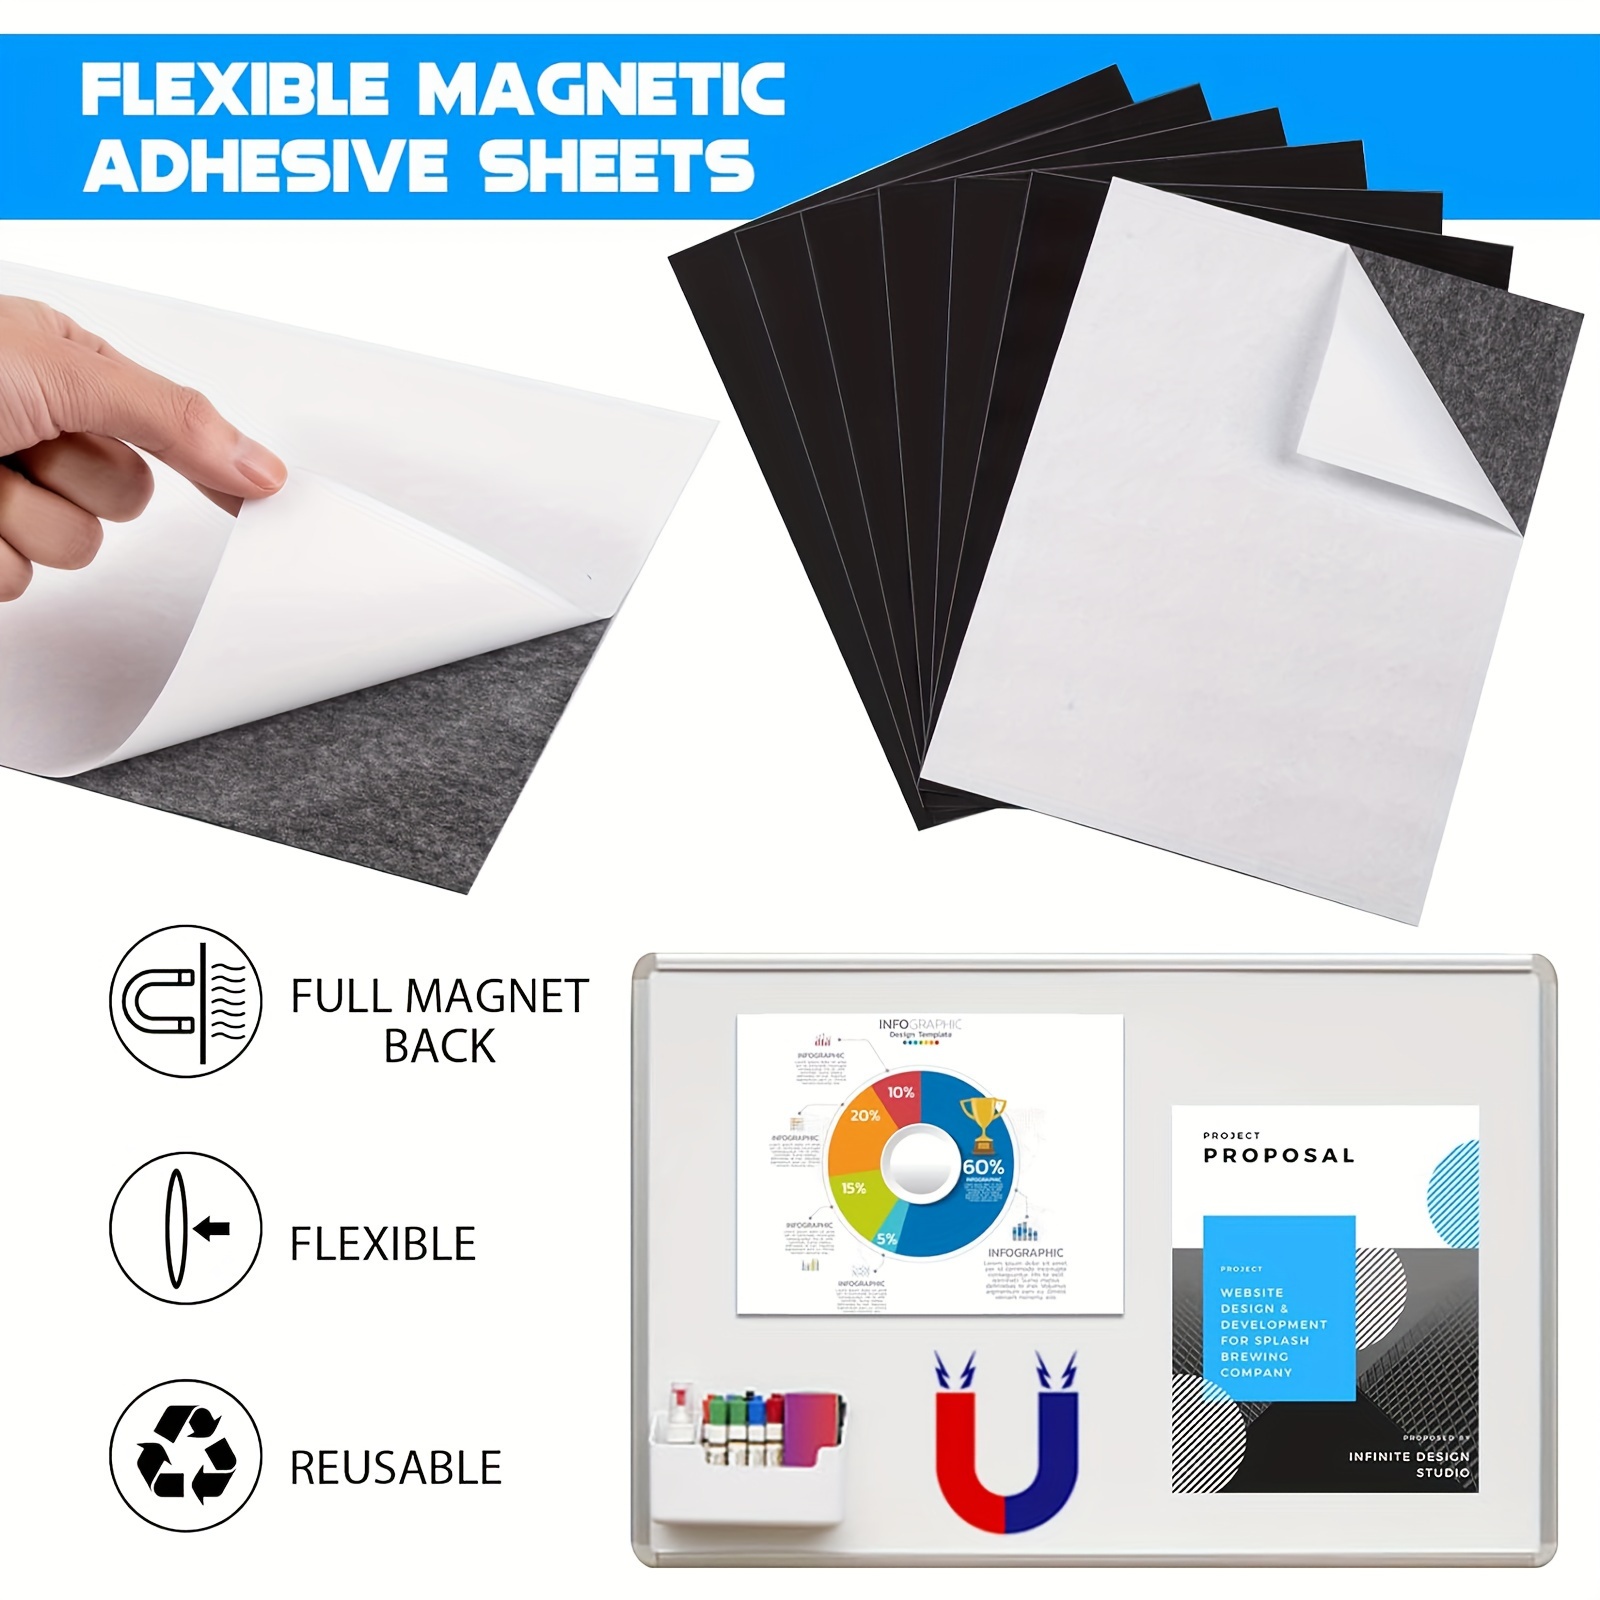 Magnet Sheets with AdhesiveBacking - Flexible Adhesive Magnetic Sheets 3PCS